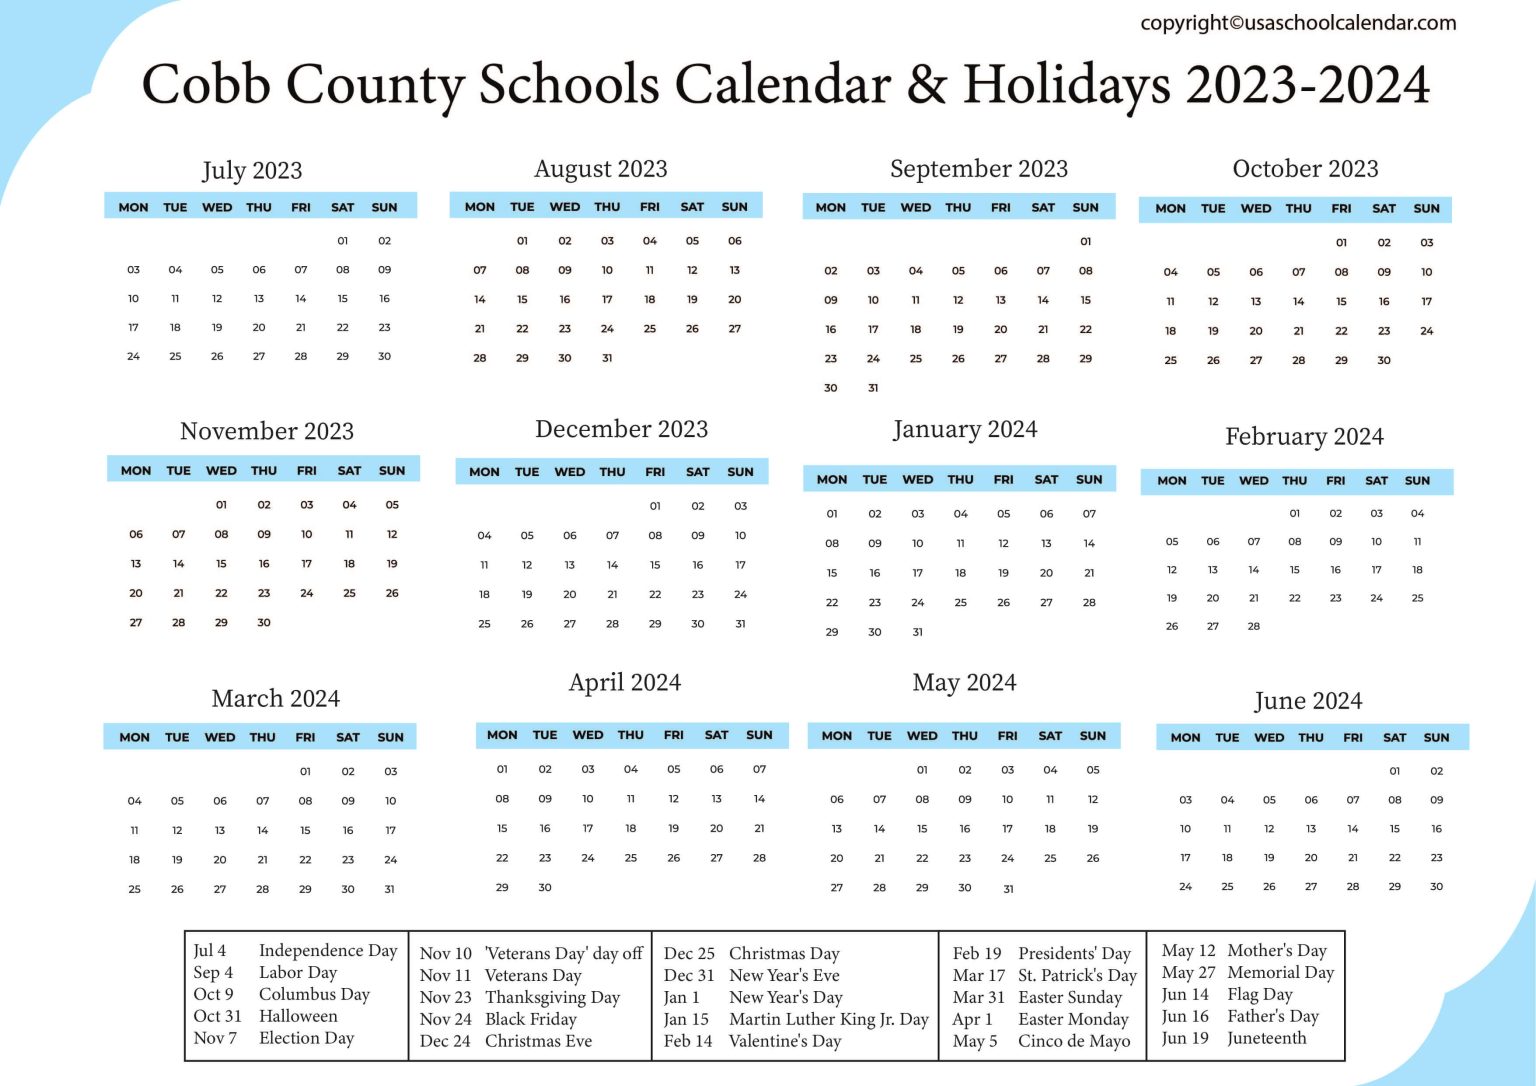 Cobb County Schools Calendar Holidays 2023 2024